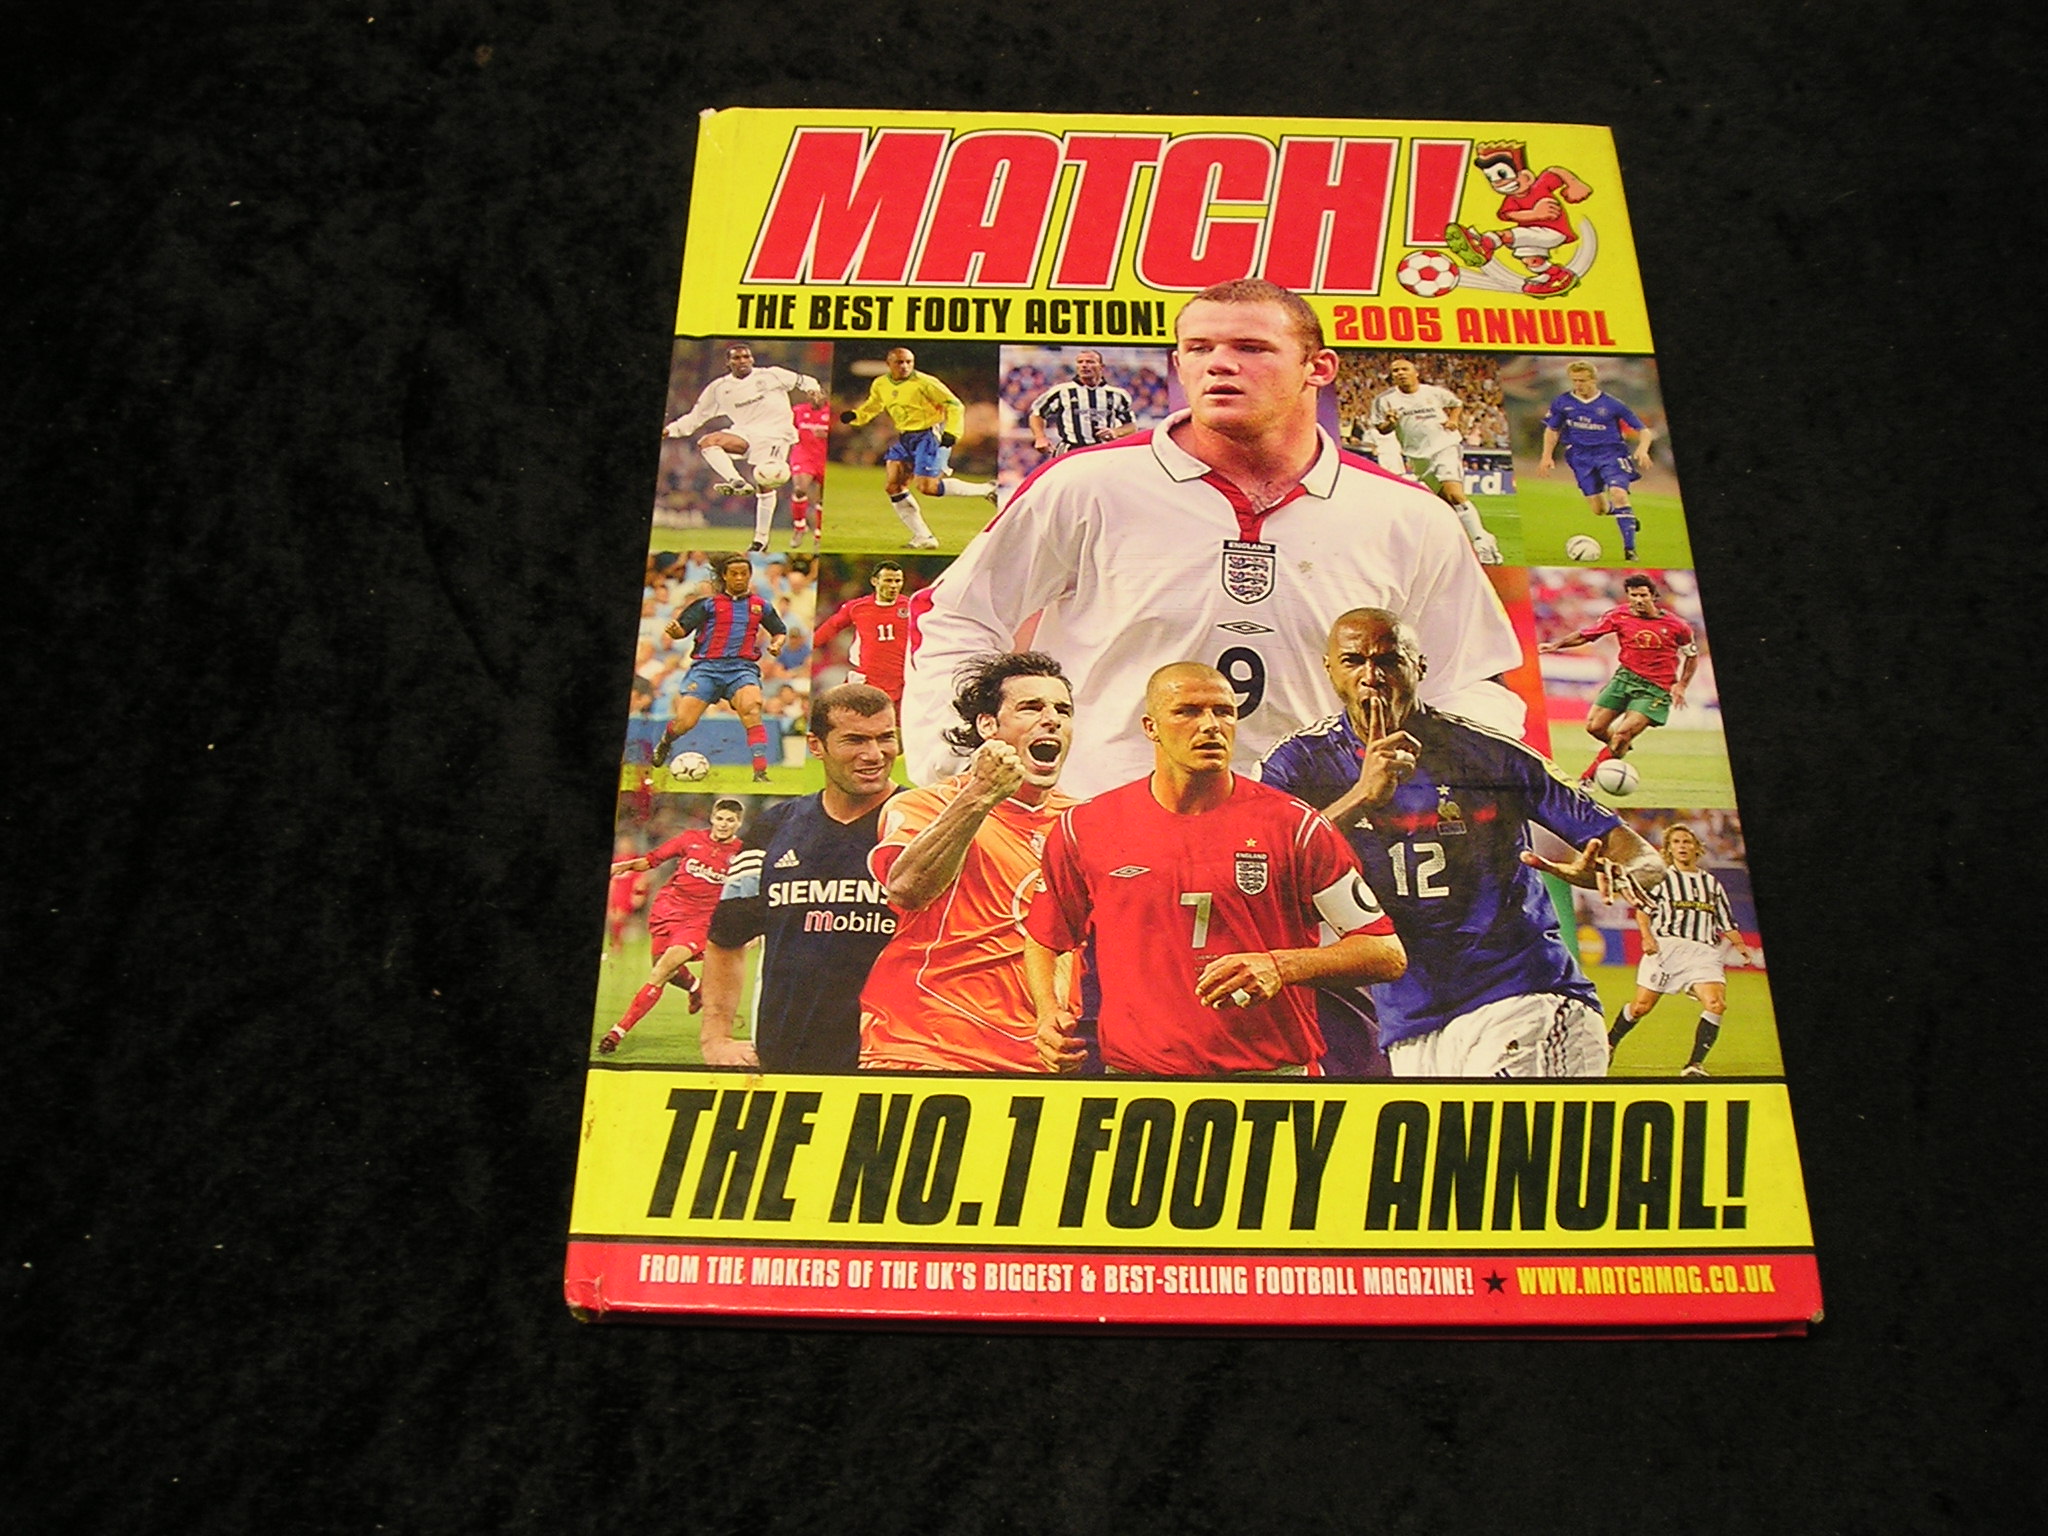 Match 2005 Annual